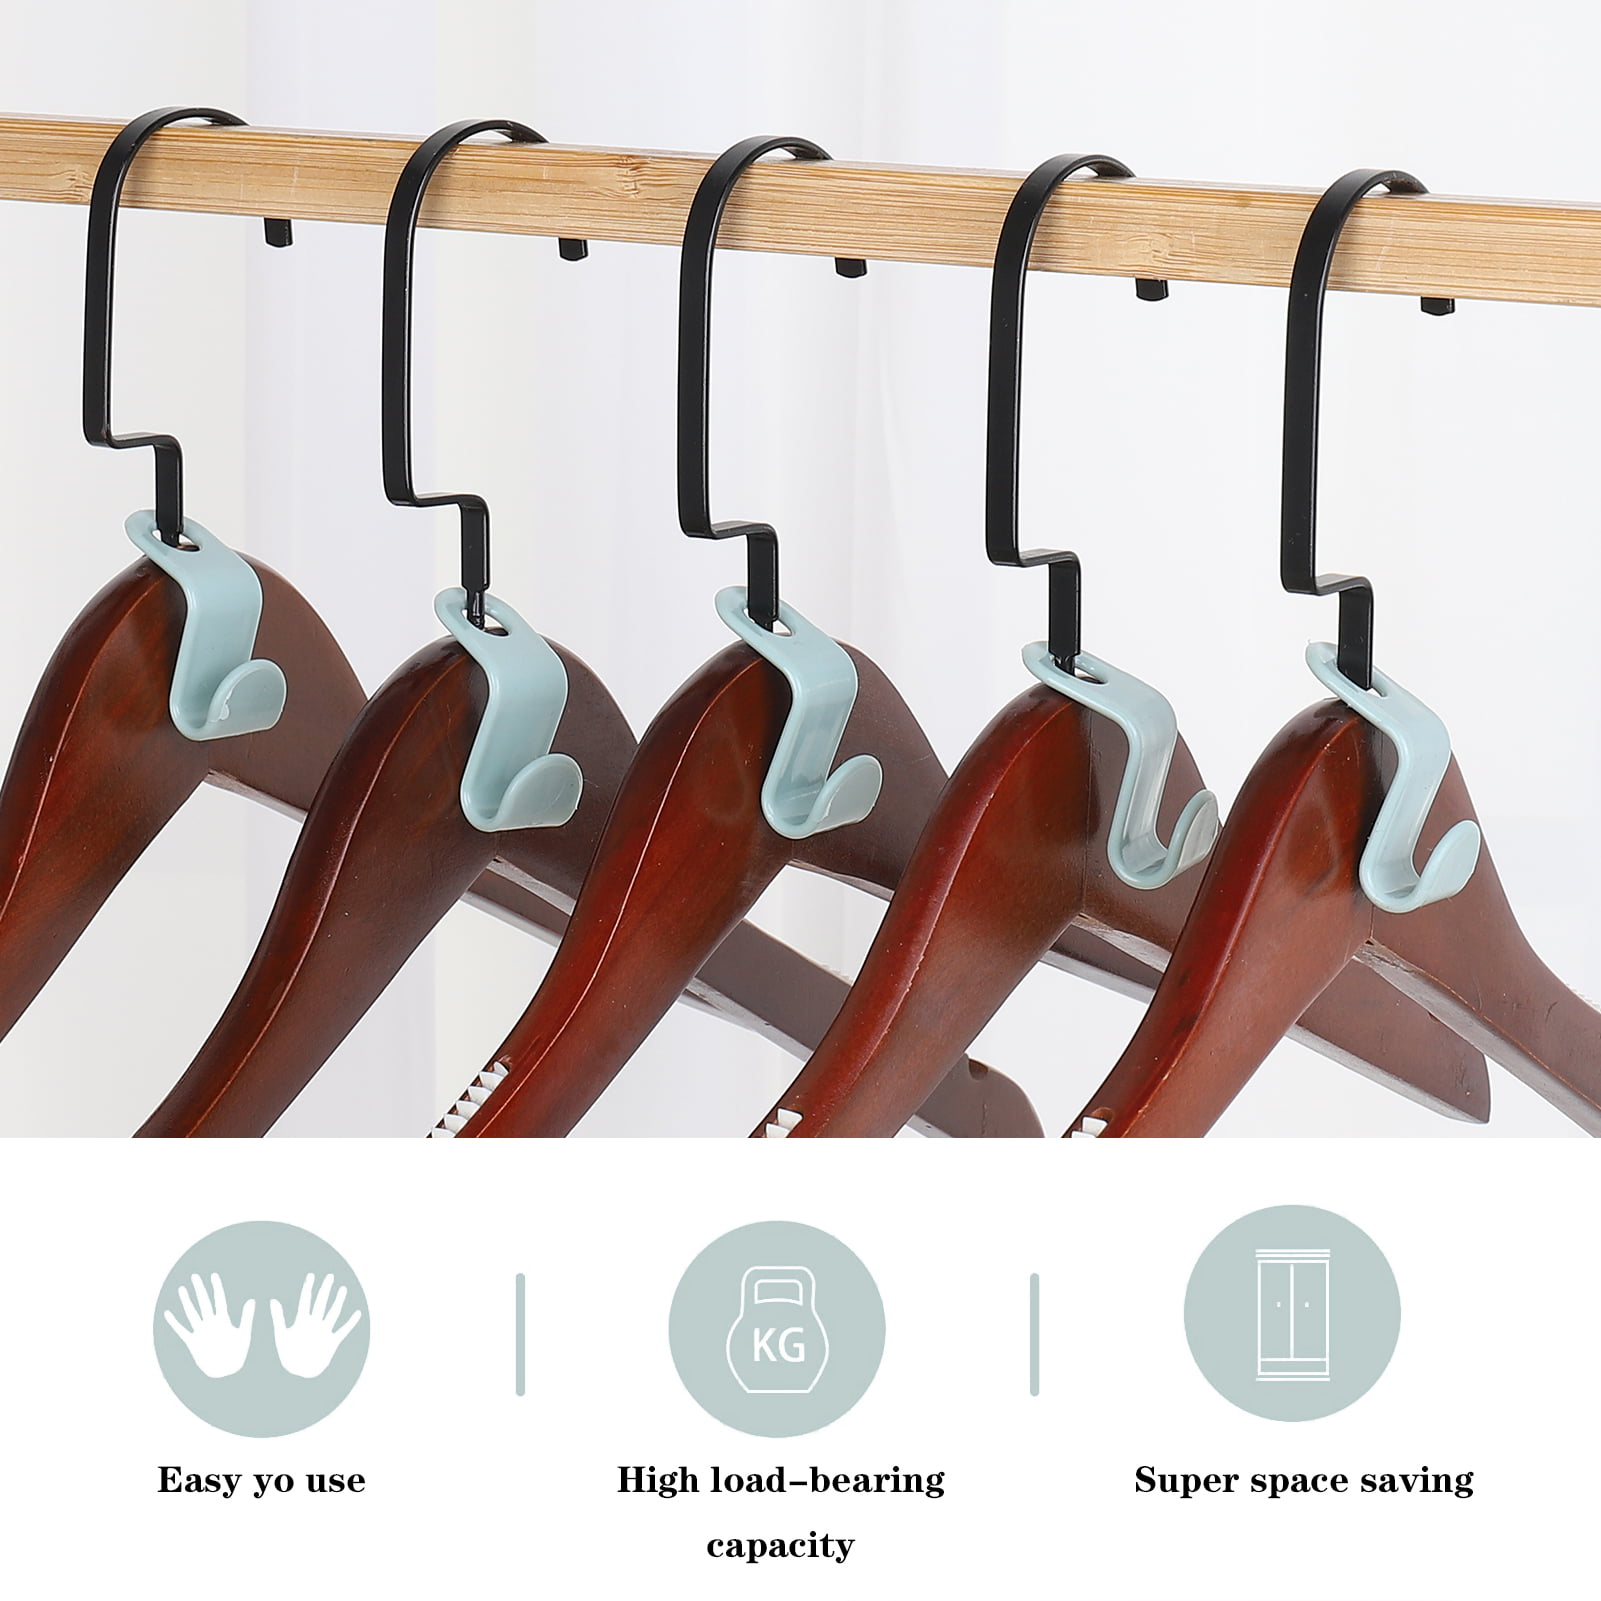 Clothes Hanger Connector Hooks – Kallohen